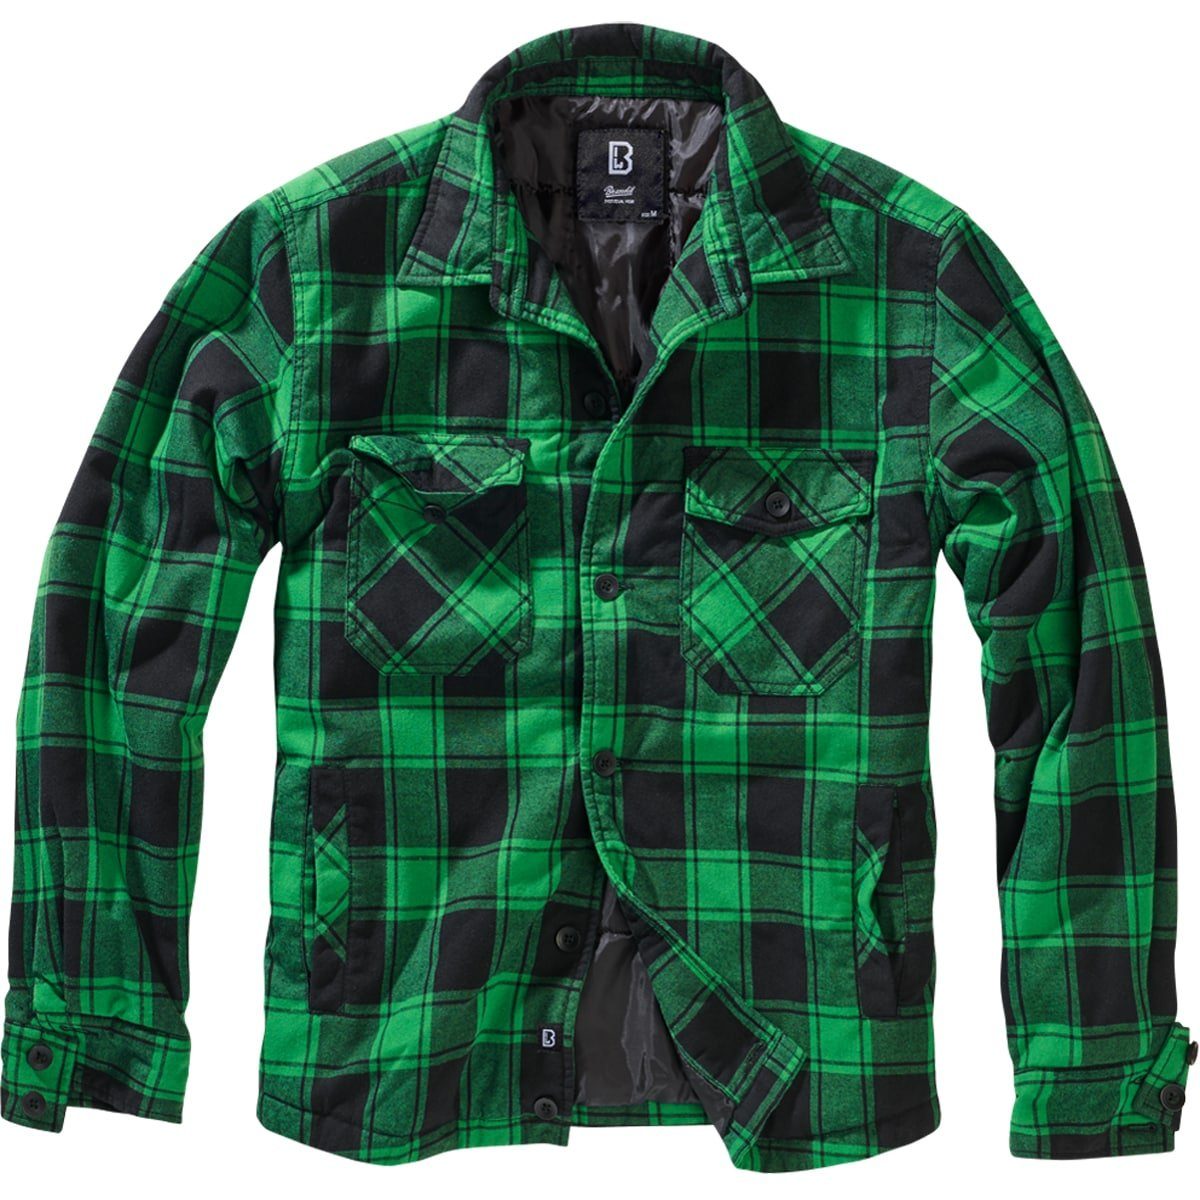 Brandit Outdoorhemd Brandit Check Grün-Schwarz Lumber gefüttert Shirt Gefüttert